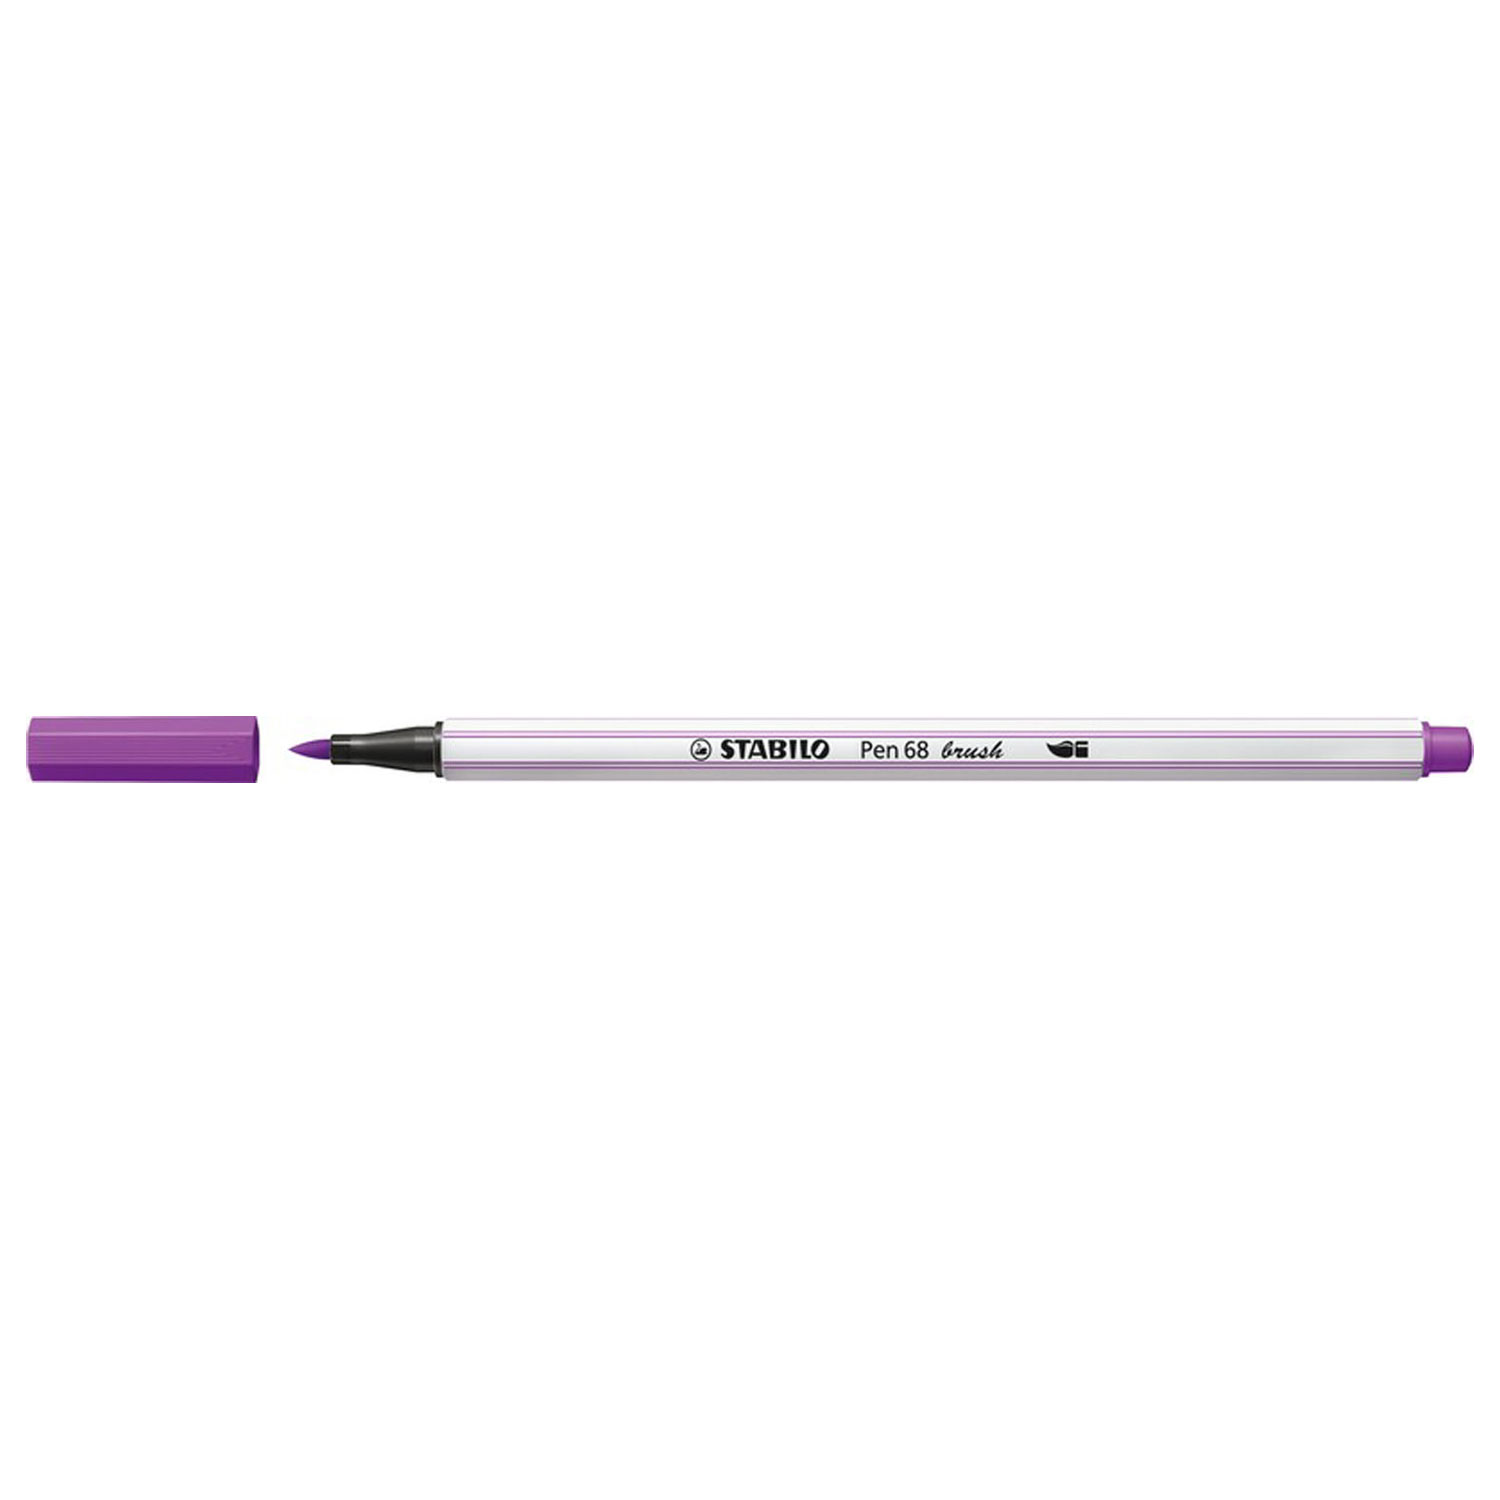 STABILO Pen 68 Brush - Filzstift - Flieder (58)